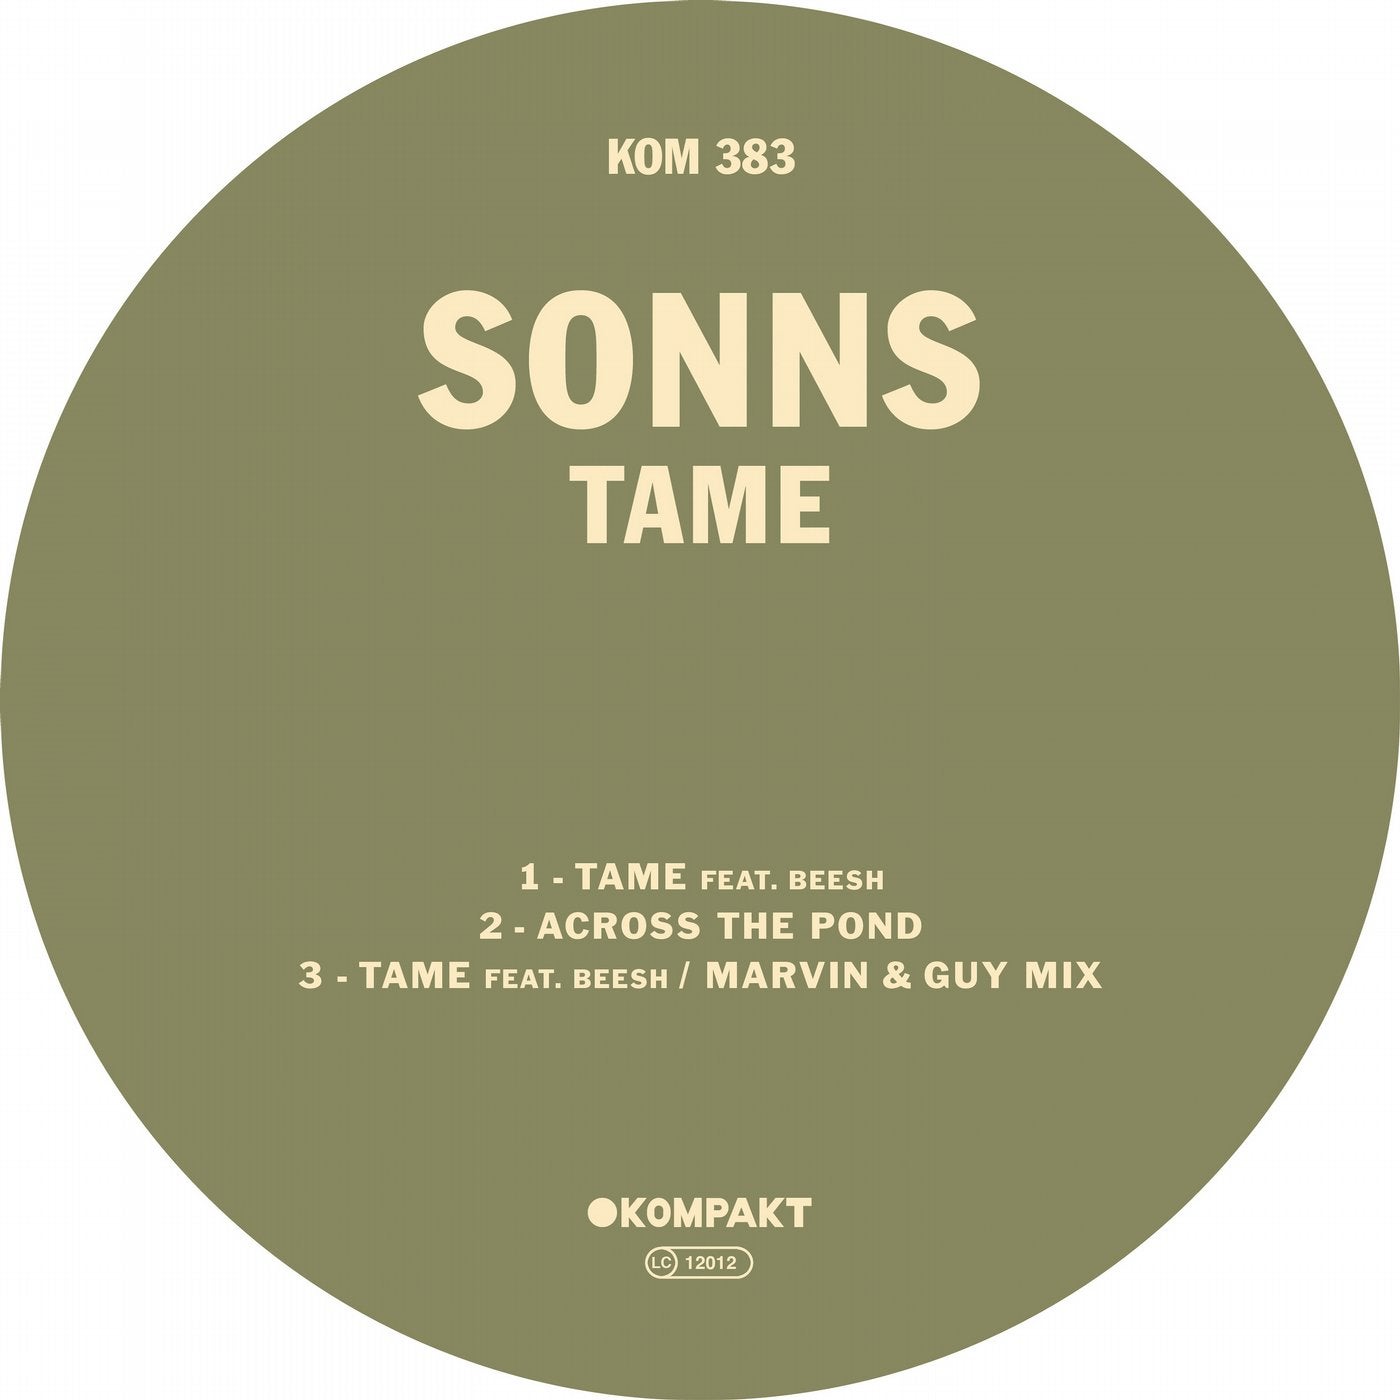 Be part of art. Jonas Bering. Сонс. Label Kompakt release Vinyl. On Tame.